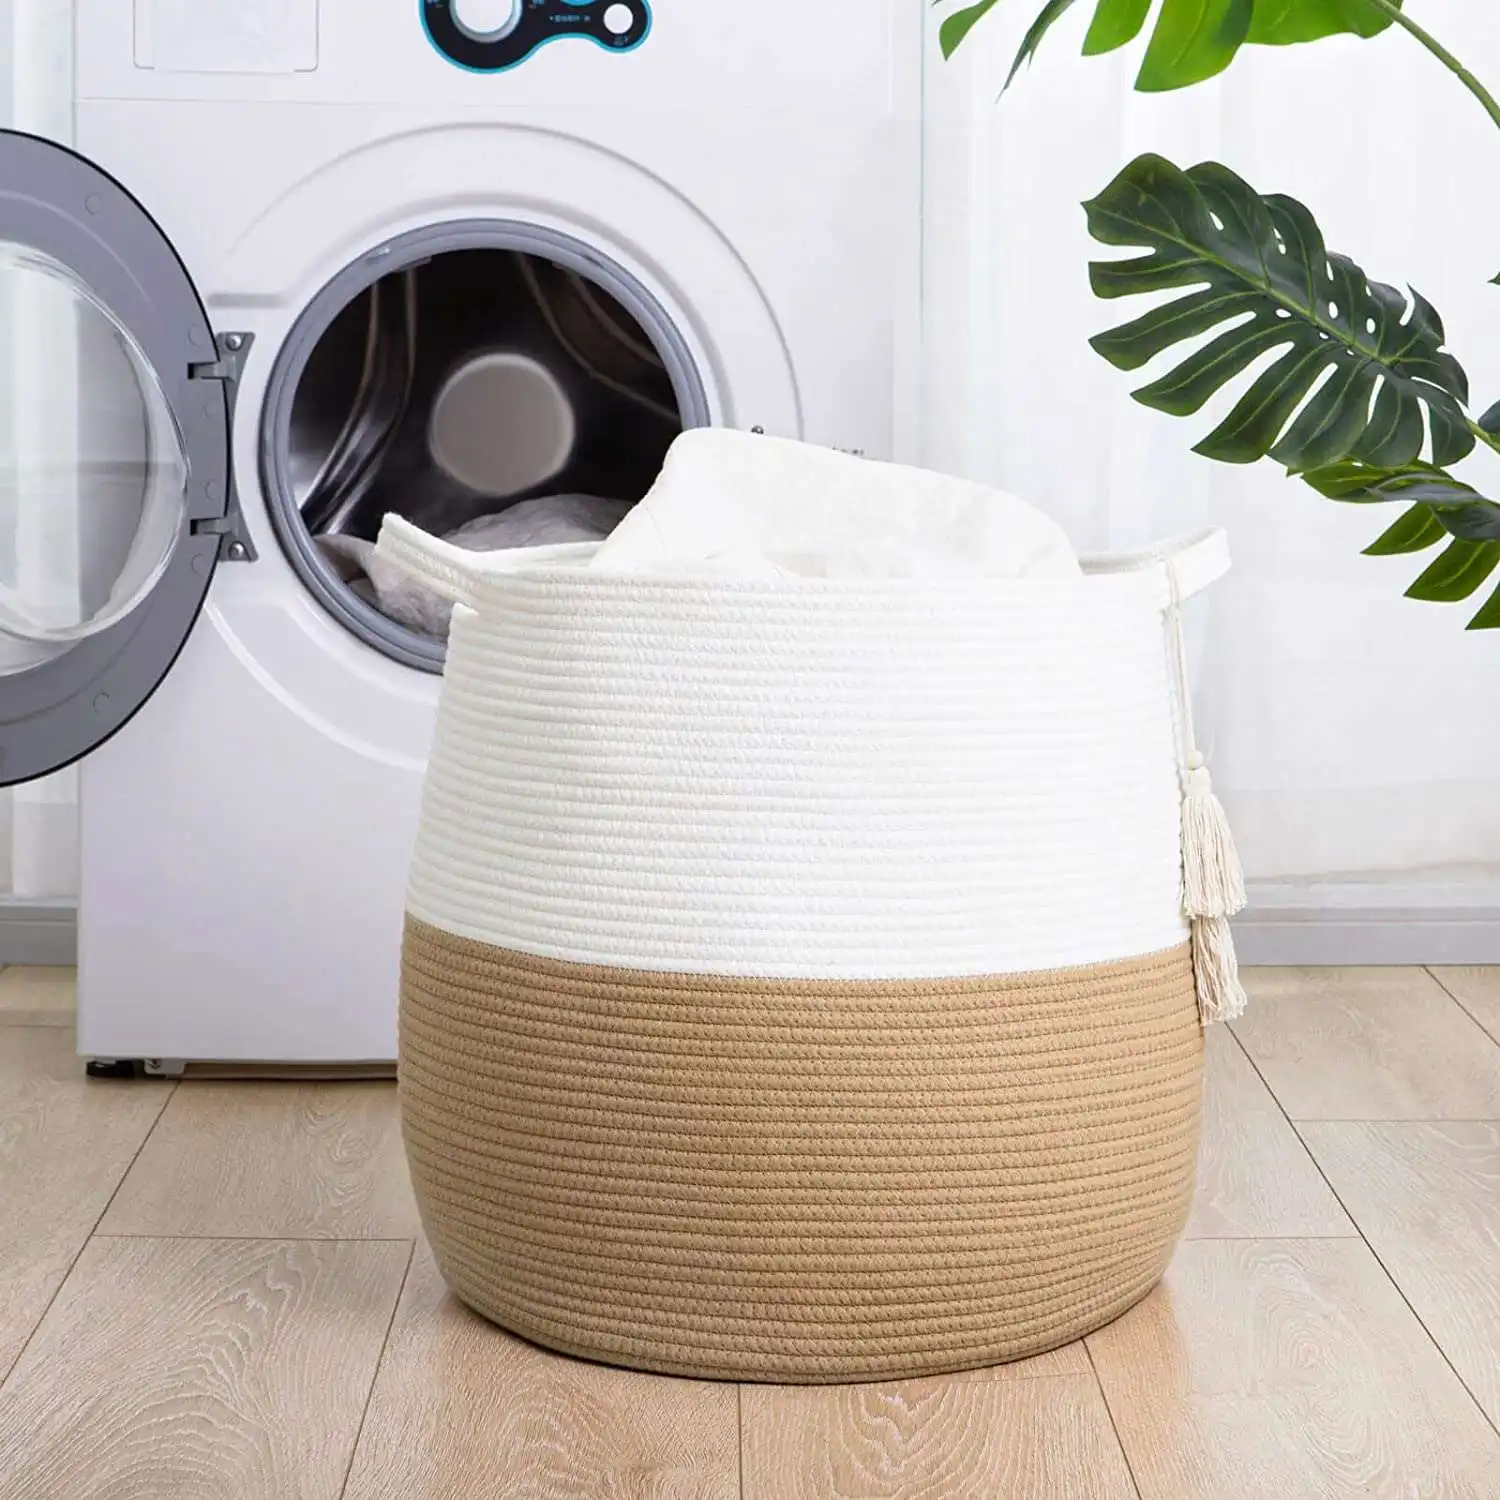 Woven Rope Storage Basket for Organizing, Boho Decorative Laundry Basket for Living Room, Round Basket for Towels, Toys